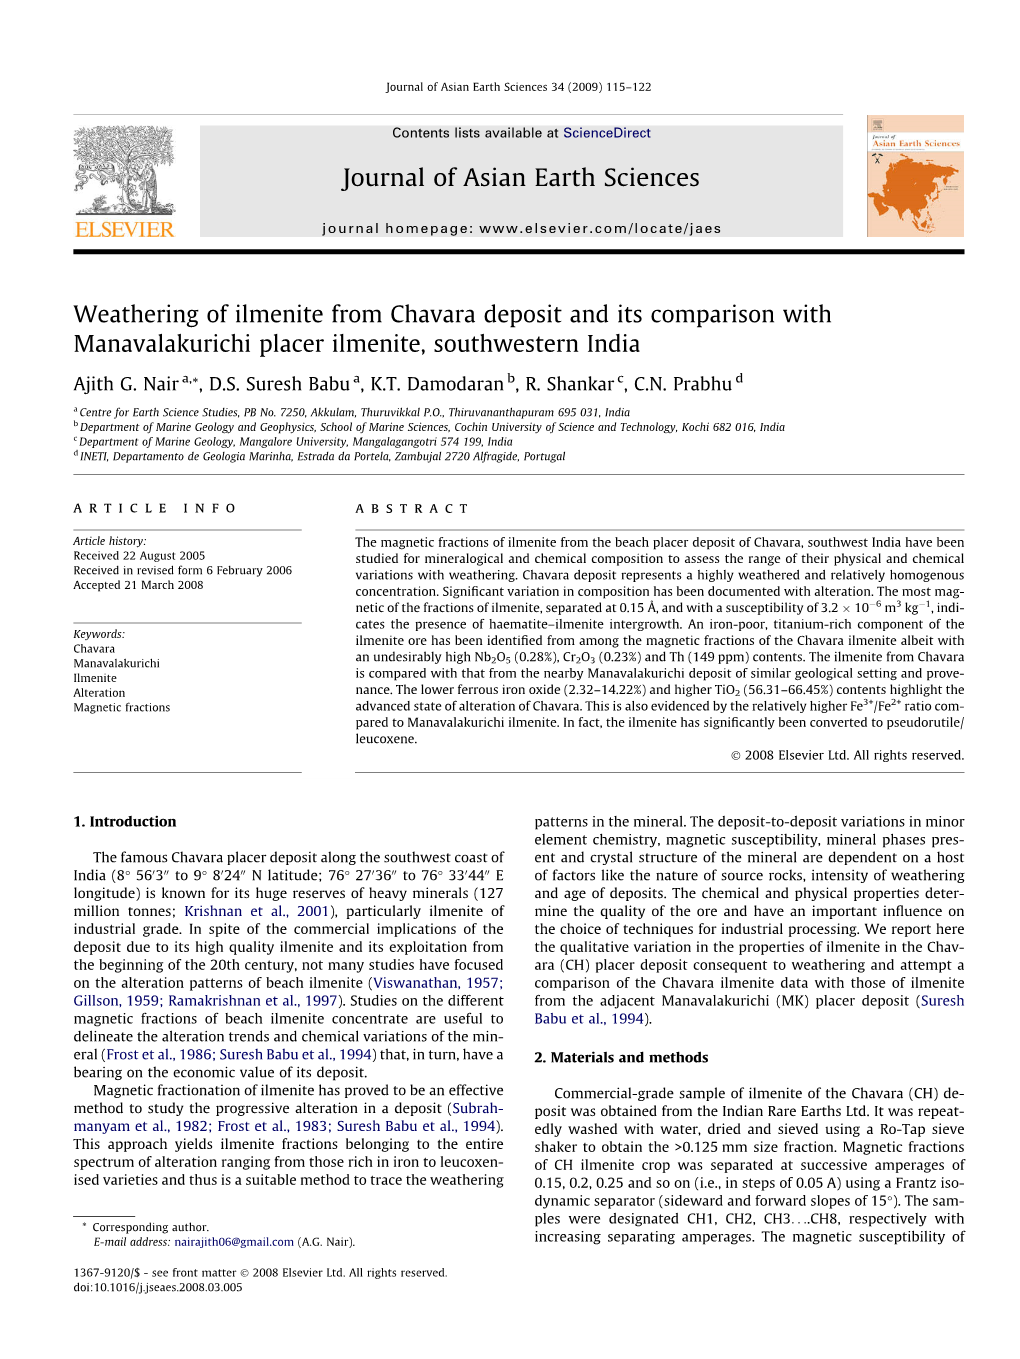 Weathering of Ilmenite from Chavara Deposit and Its Comparison with Manavalakurichi Placer Ilmenite, Southwestern India